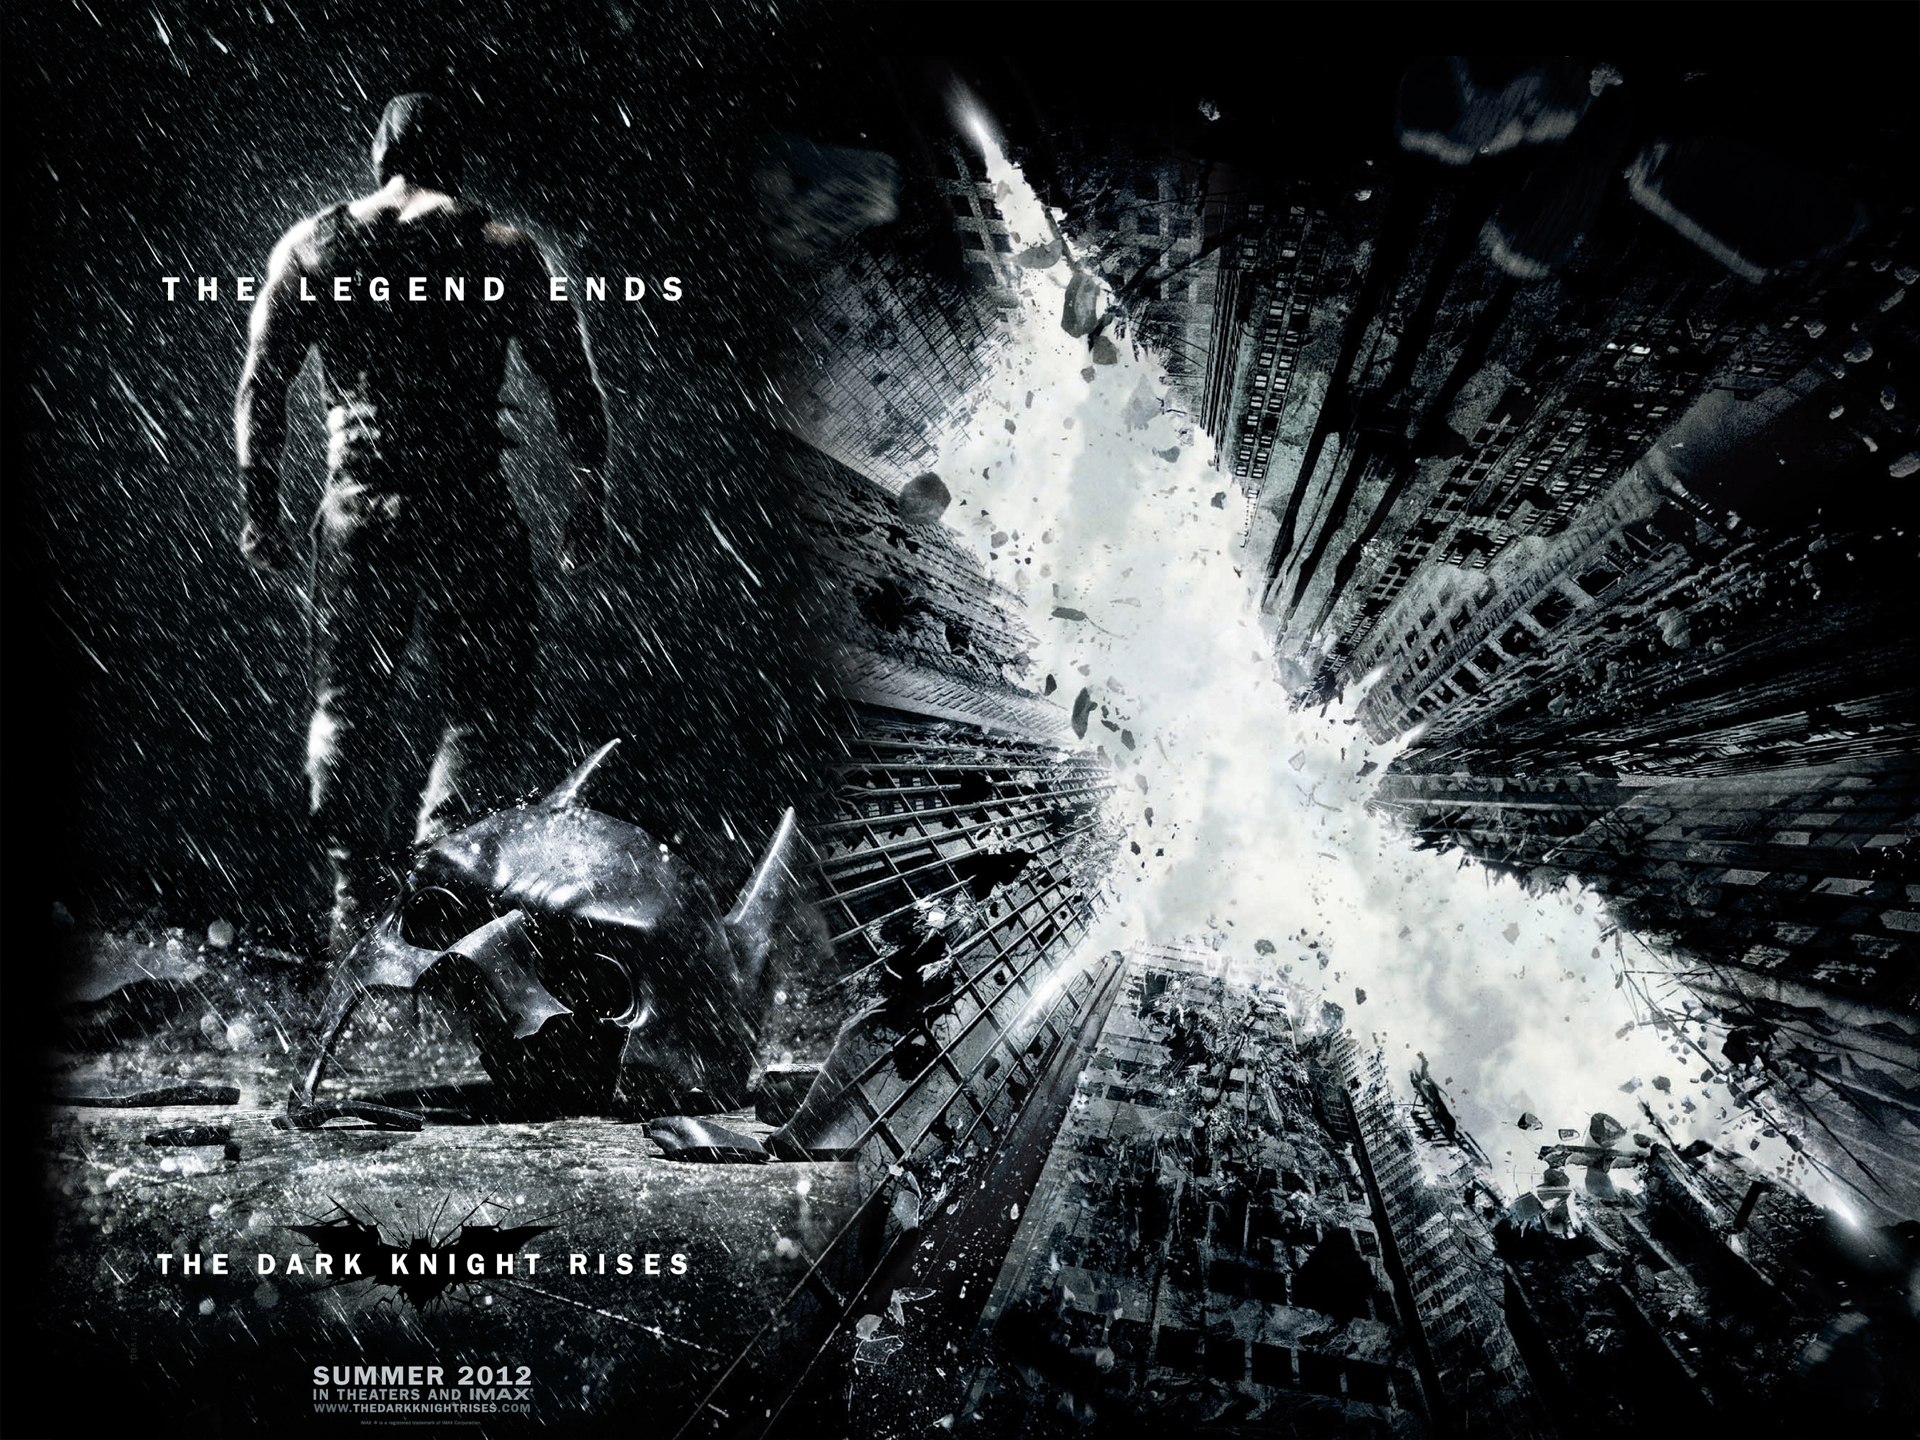 HD Wallpaper And Desktop Background Dark Knight Rises